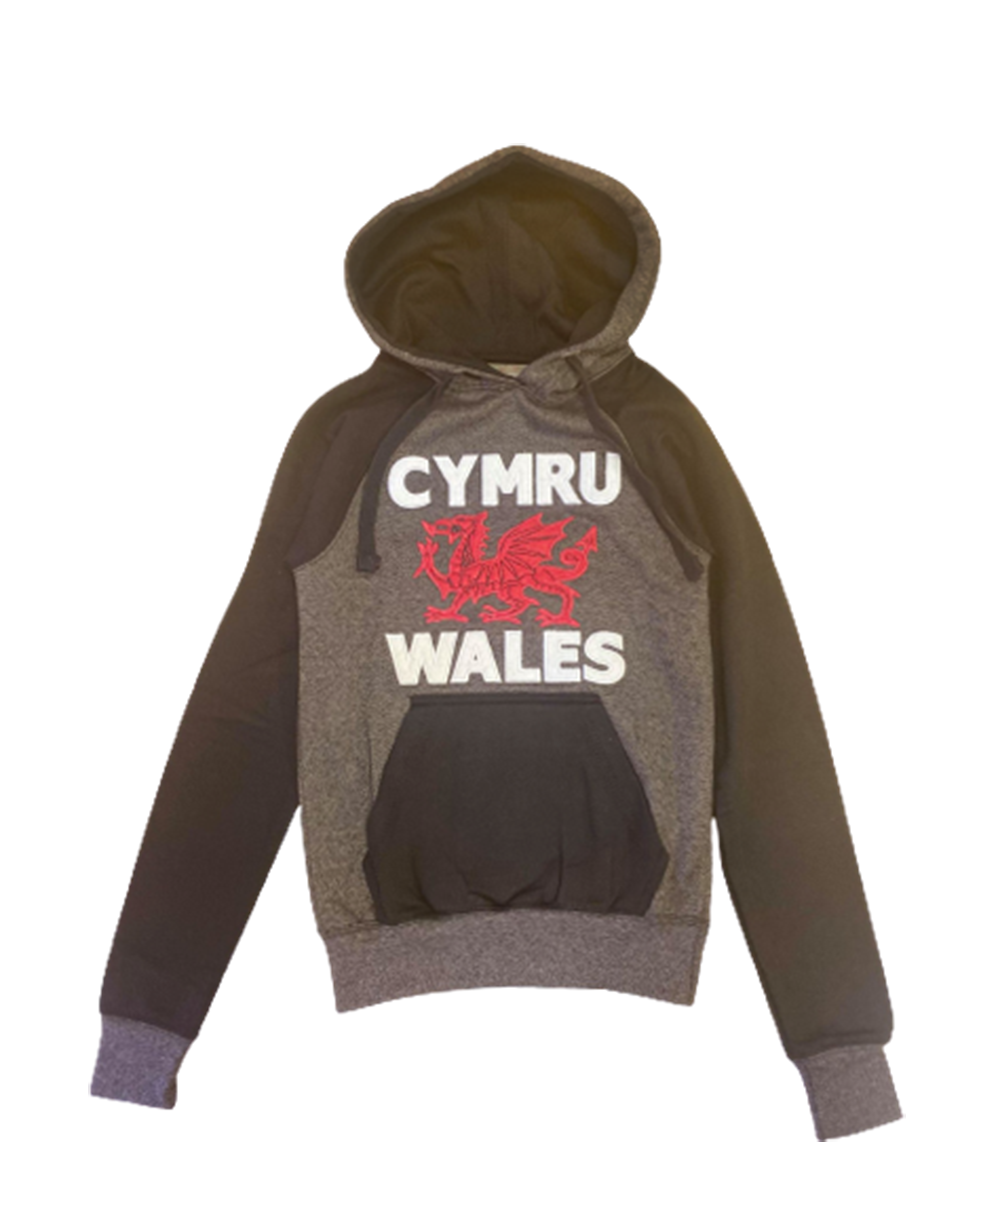 Women's Carys Cymru Wales Hoodie in Charcoal Grey